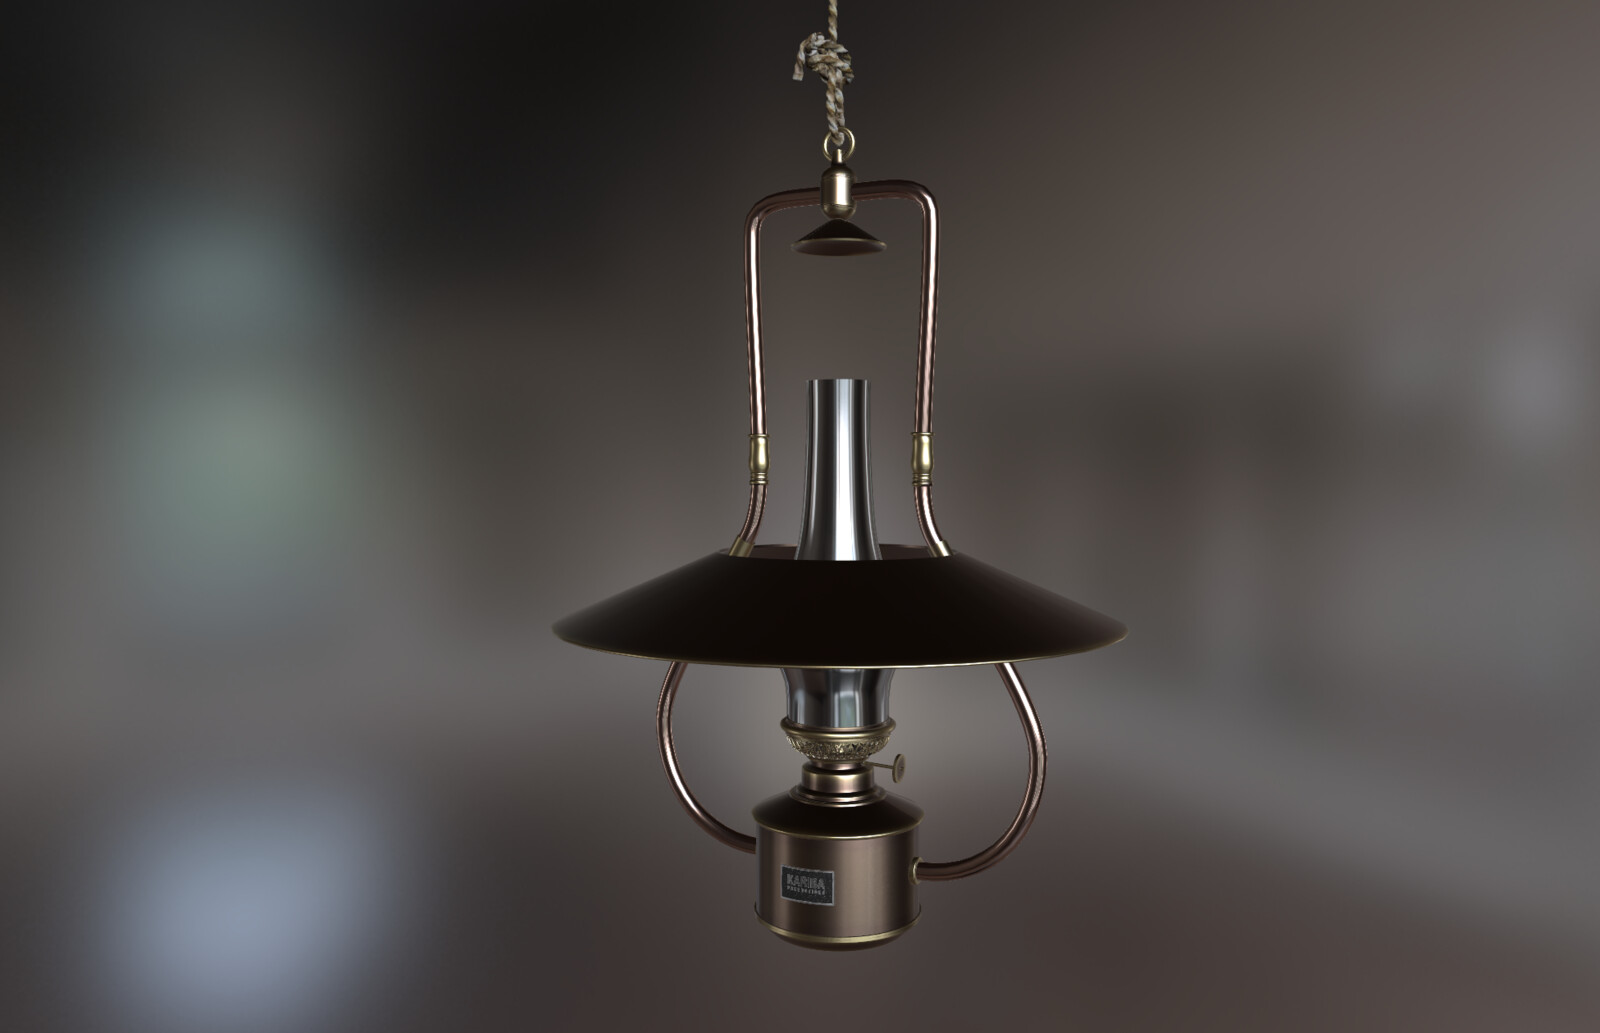 Old oil lamp materials rework